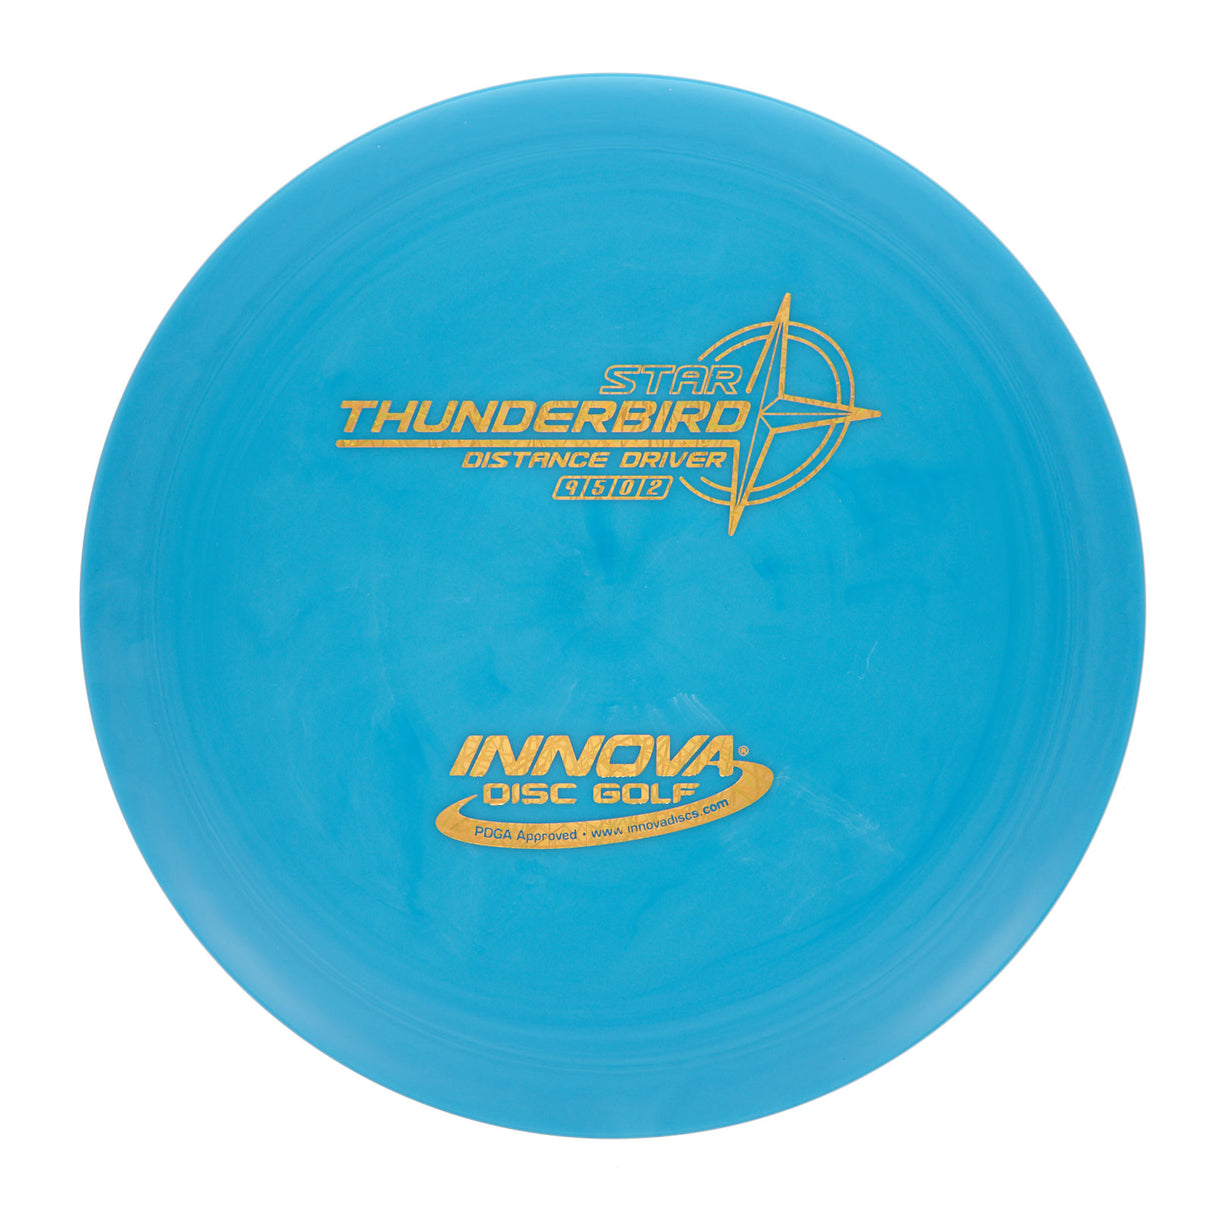 Innova Thunderbird - Star 168g | Style 0001